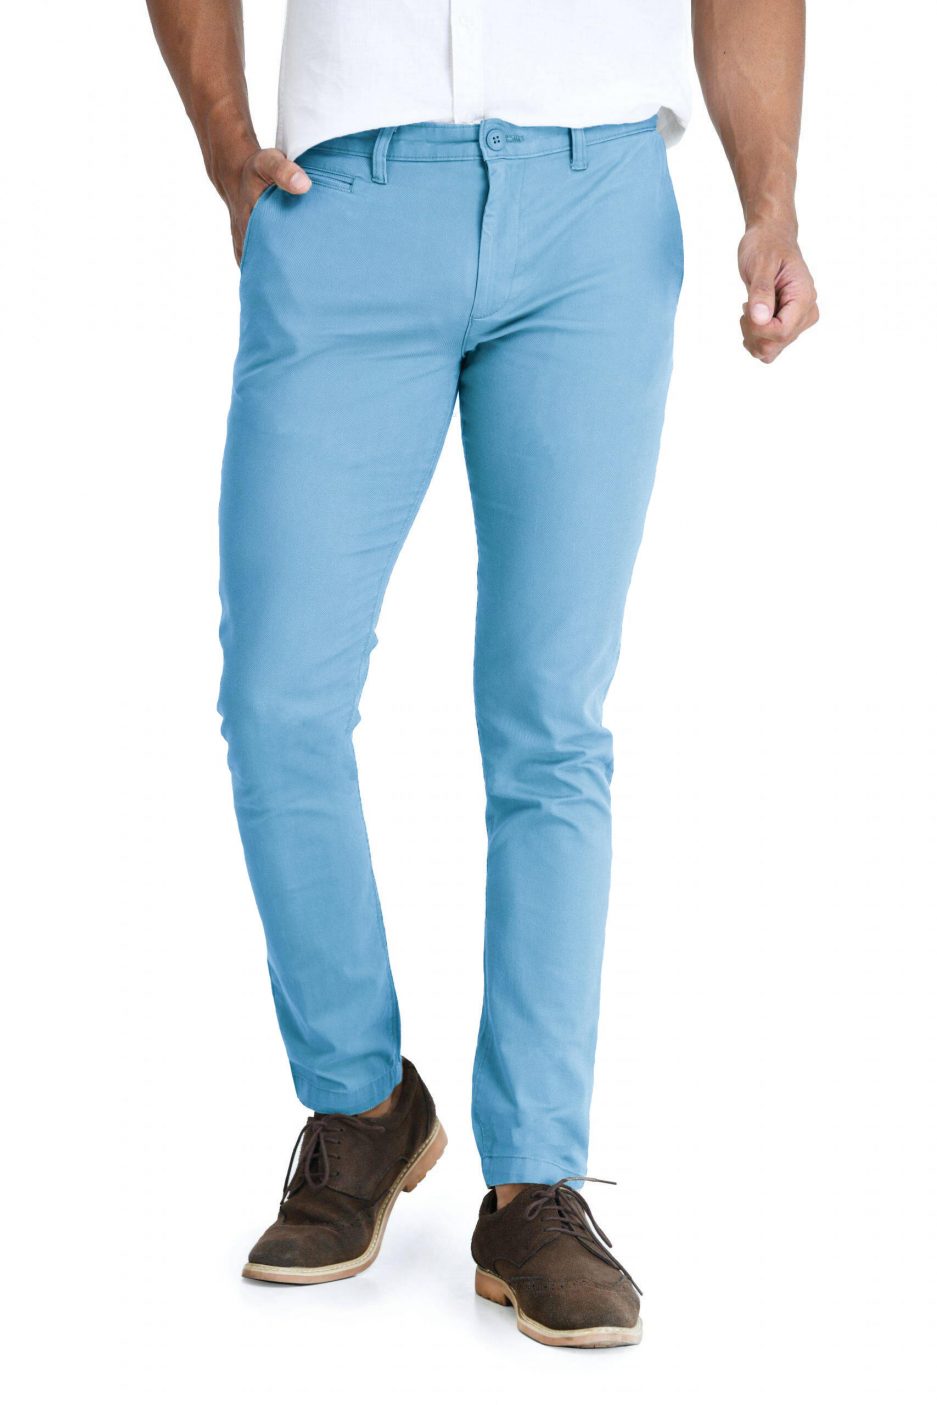 Men’s Chino Pant – Sky Blue – Moose Clothing Company